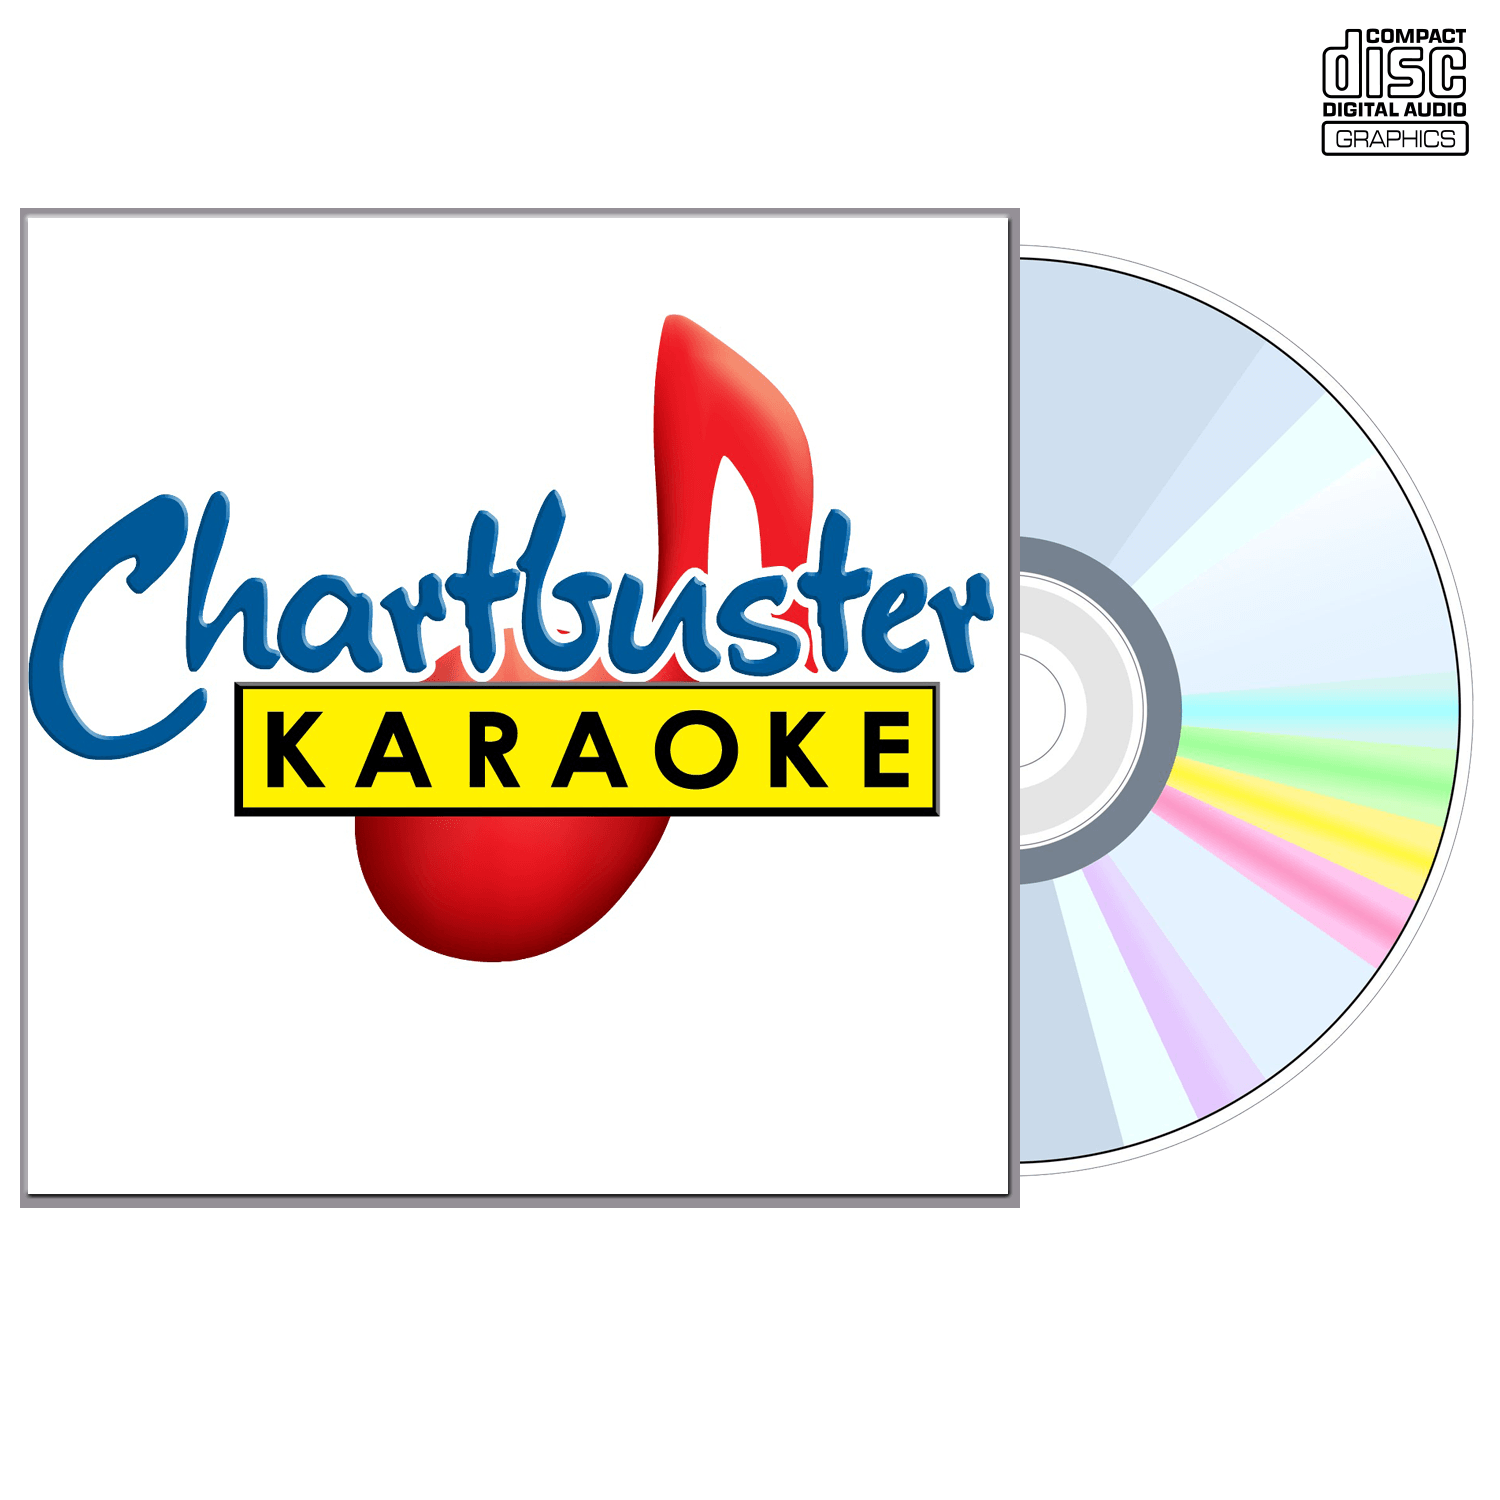 Best Of Willie Nelson - CD+G - Chartbuster Karaoke - Karaoke Home Entertainment